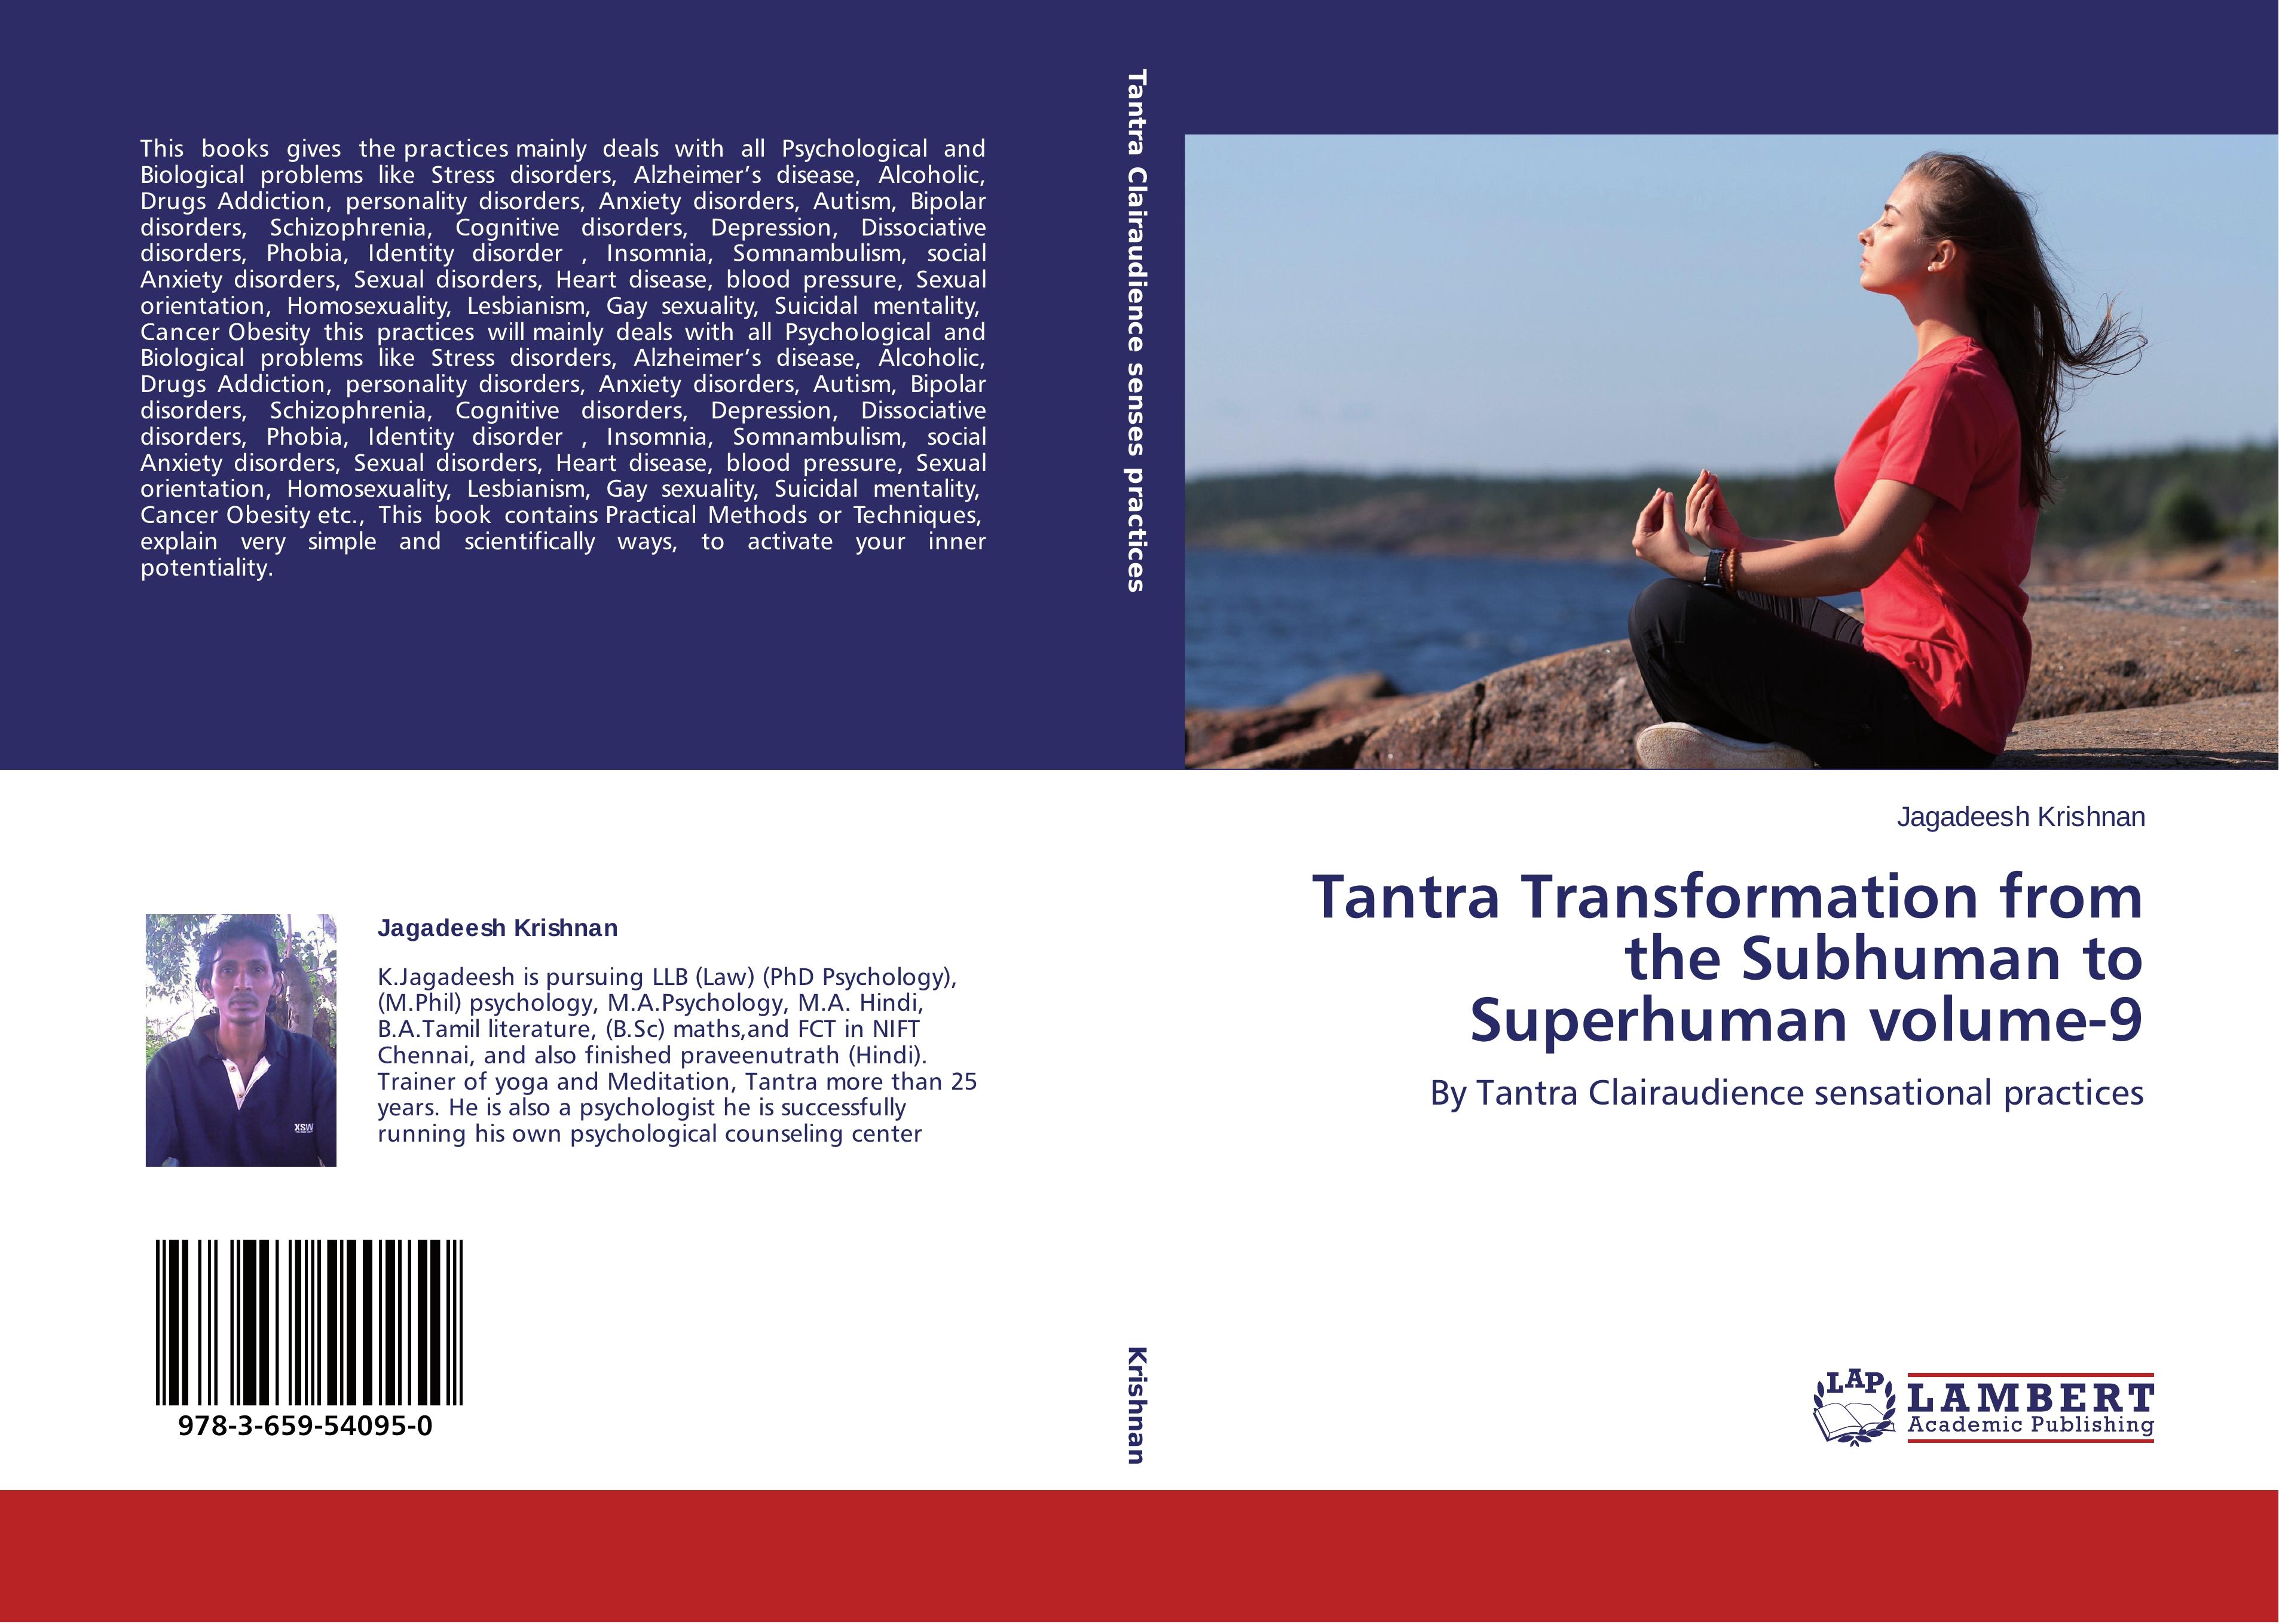 Tantra Transformation from the Subhuman to Superhuman volume-9 | By Tantra Clairaudience sensational practices | Jagadeesh Krishnan | Taschenbuch | Paperback | 212 S. | Englisch | 2014 - Krishnan, Jagadeesh